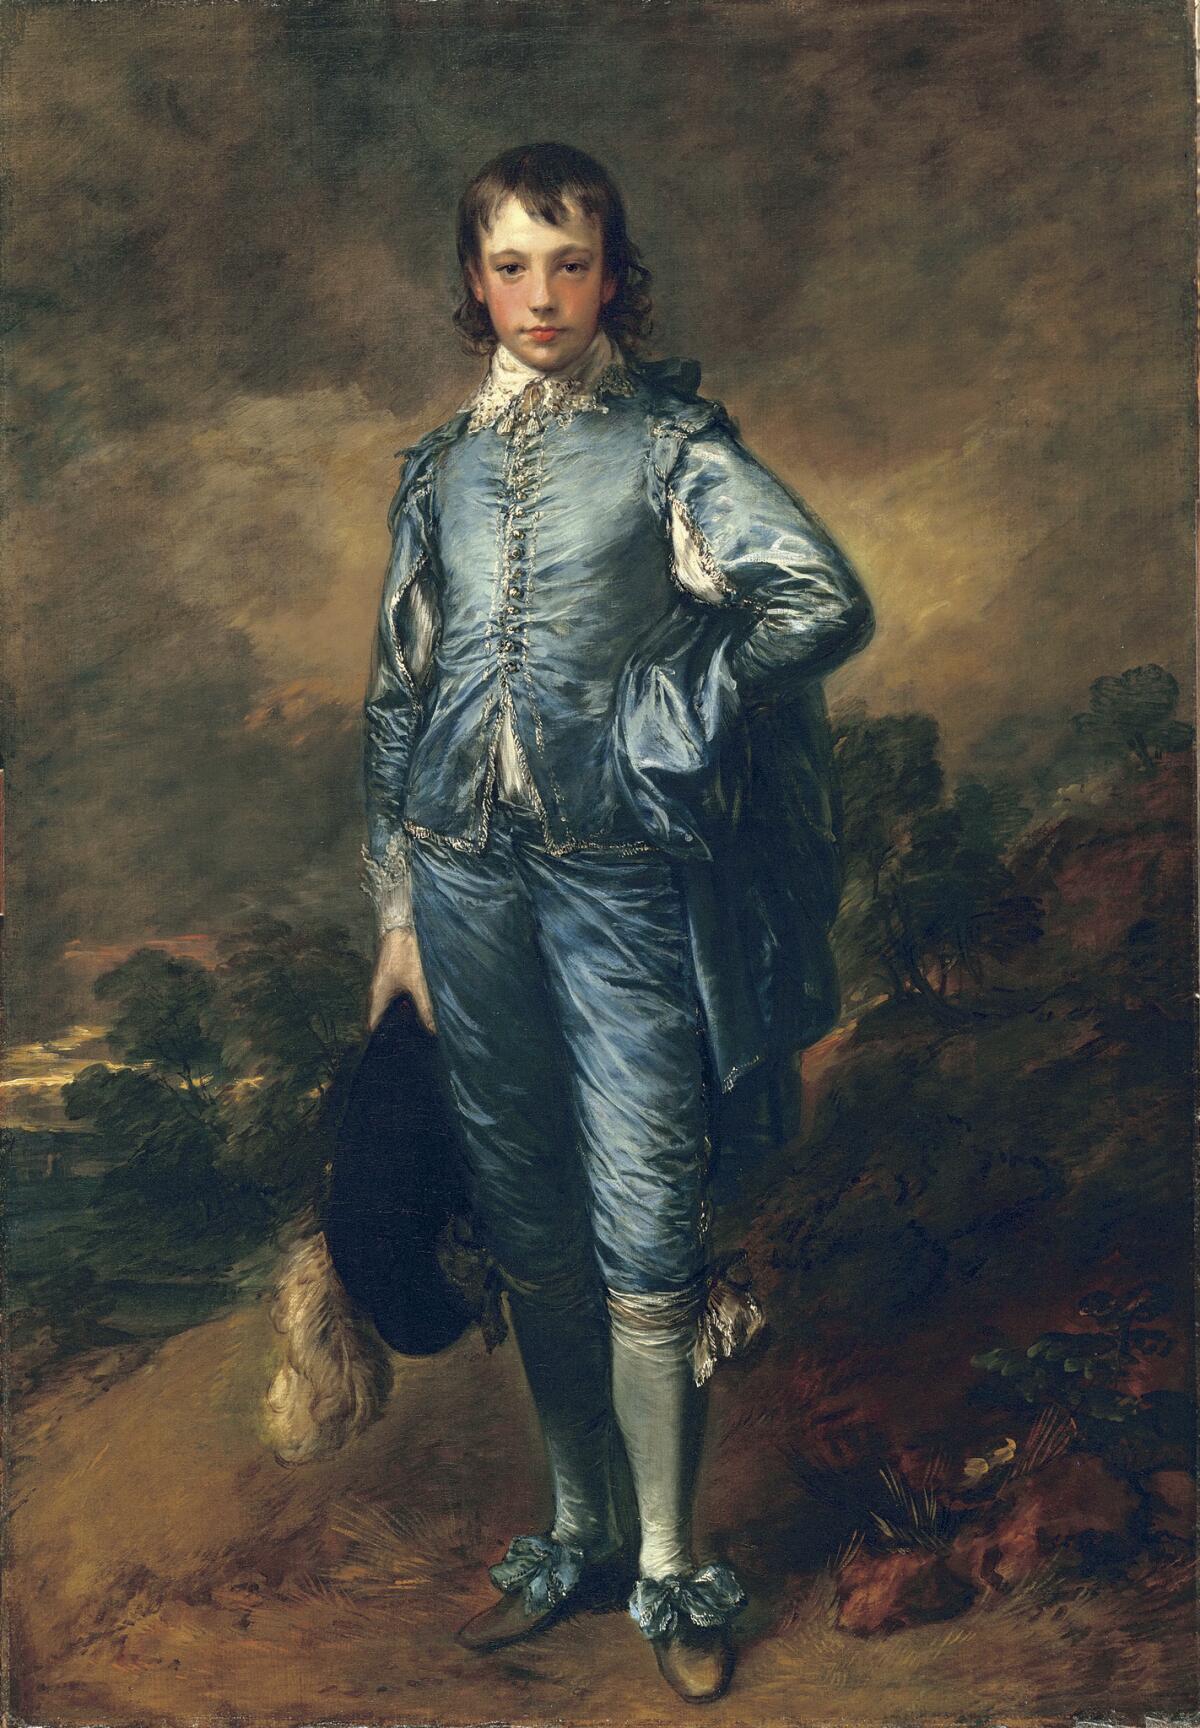 Thomas Gainsborough’s “The Blue Boy” (circa 1770), oil on canvas